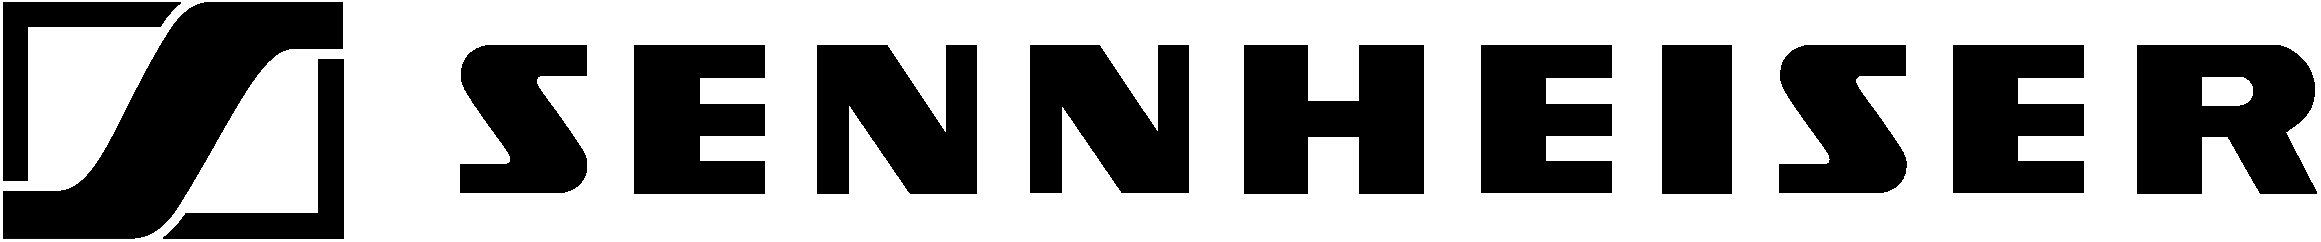 Sennheiser-logo-BLK-2.jpg